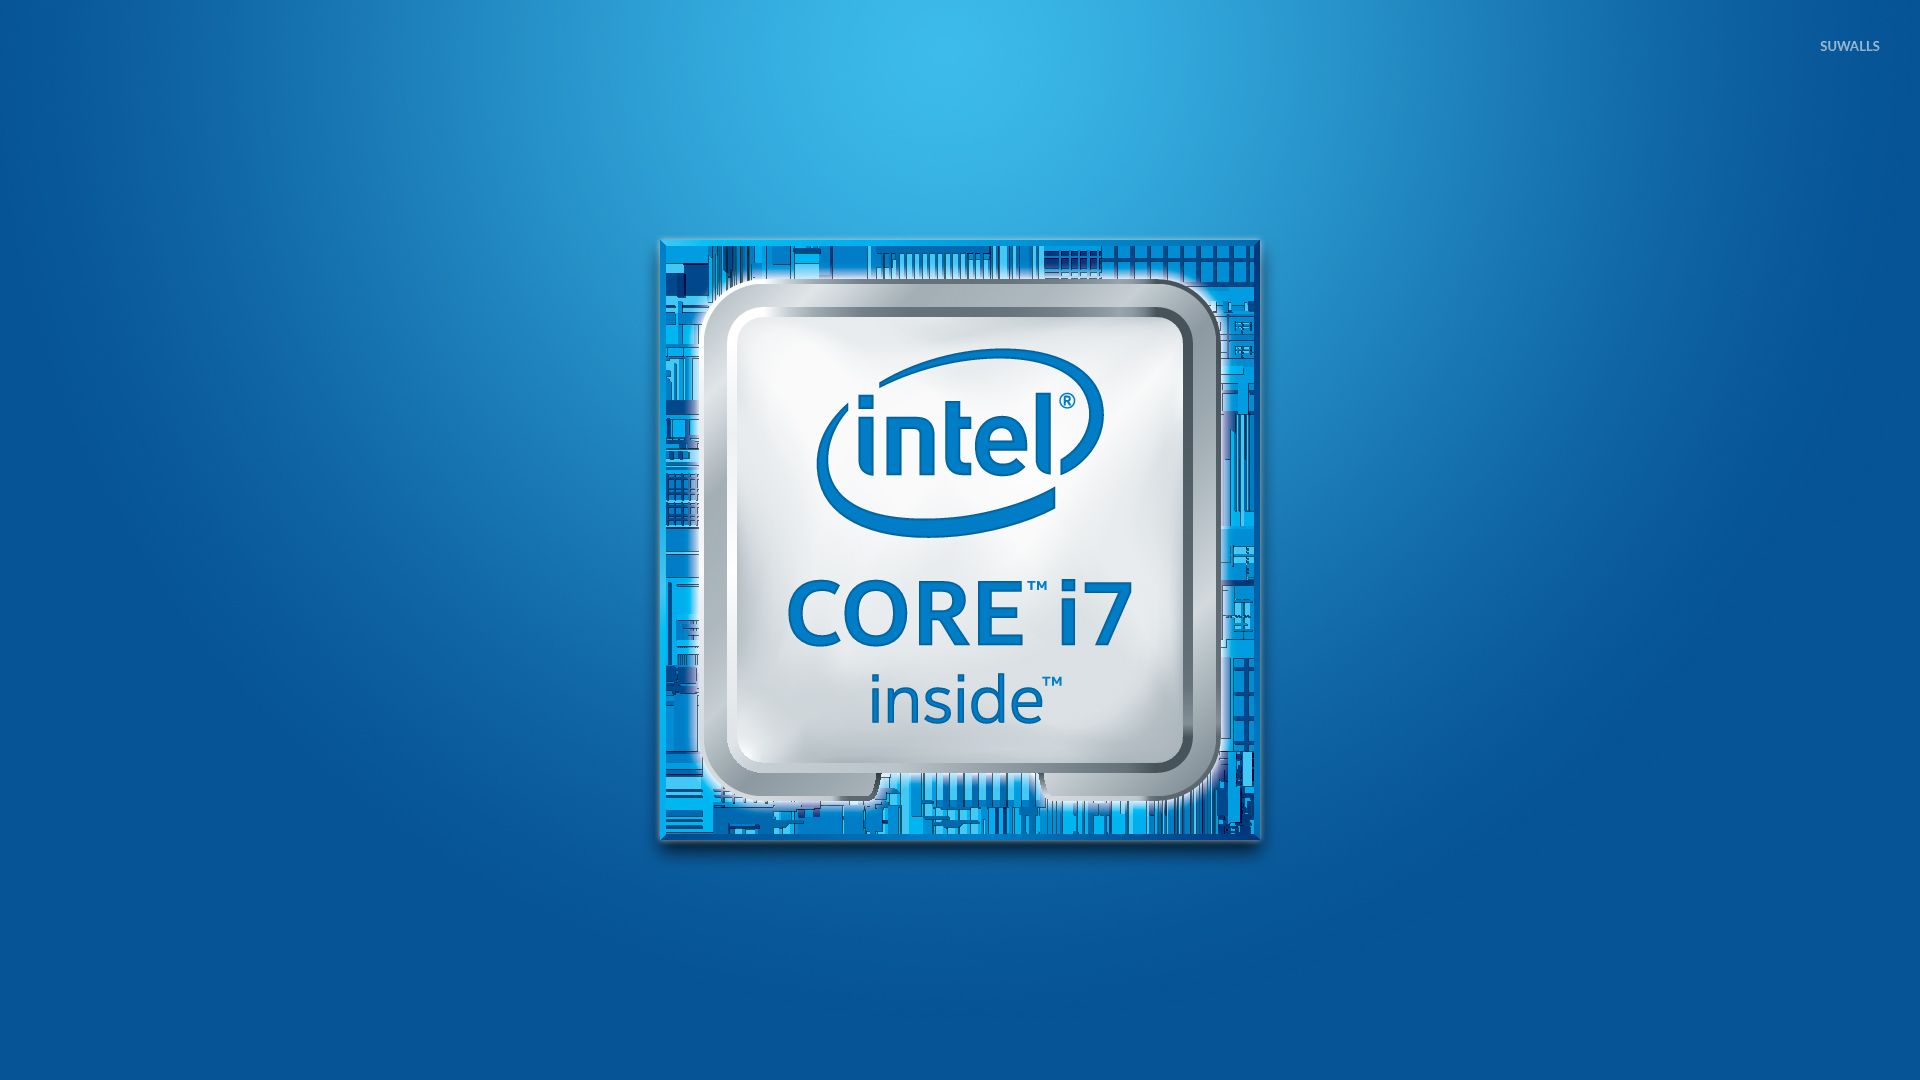 Intel Xeon w-10885m